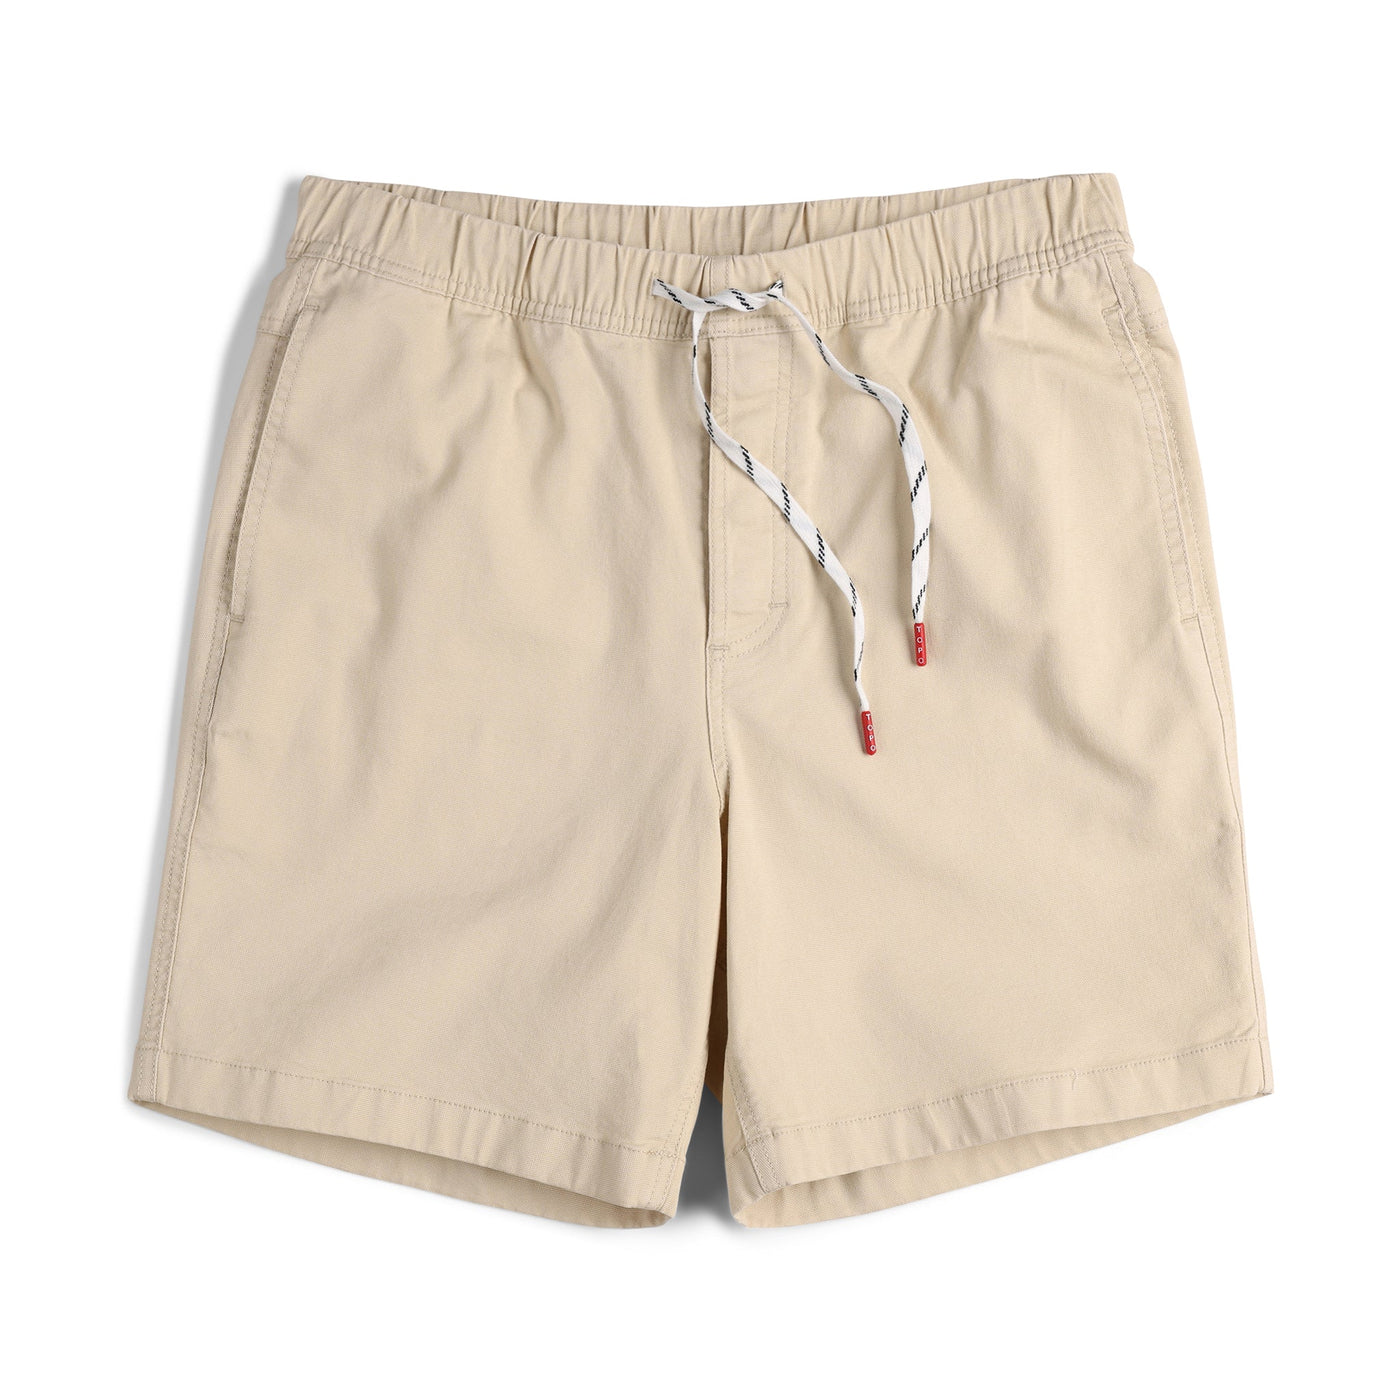 Topo Designs Men's drawstring Dirt Shorts 100% organic cotton in "Sand" white.